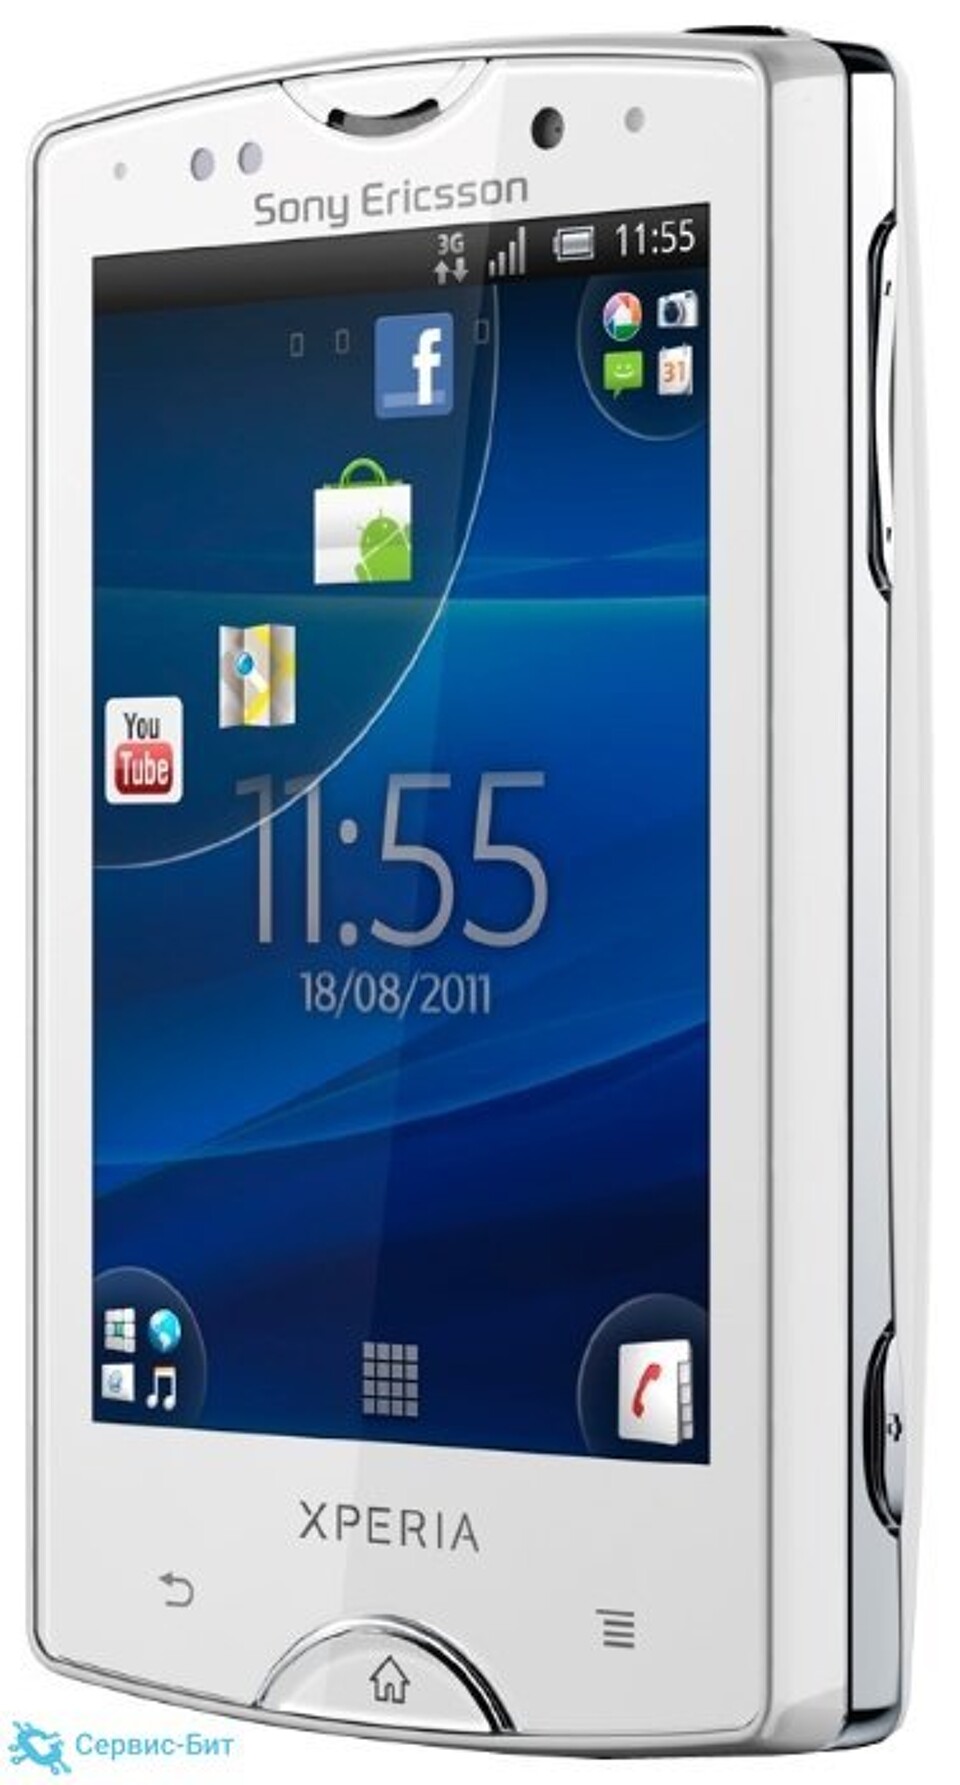 Sony xperia mini. Sony Ericsson Xperia Mini. Sony Ericsson sk17i. Sony Xperia Mini 2011. Sony Xperia Mini Pro.